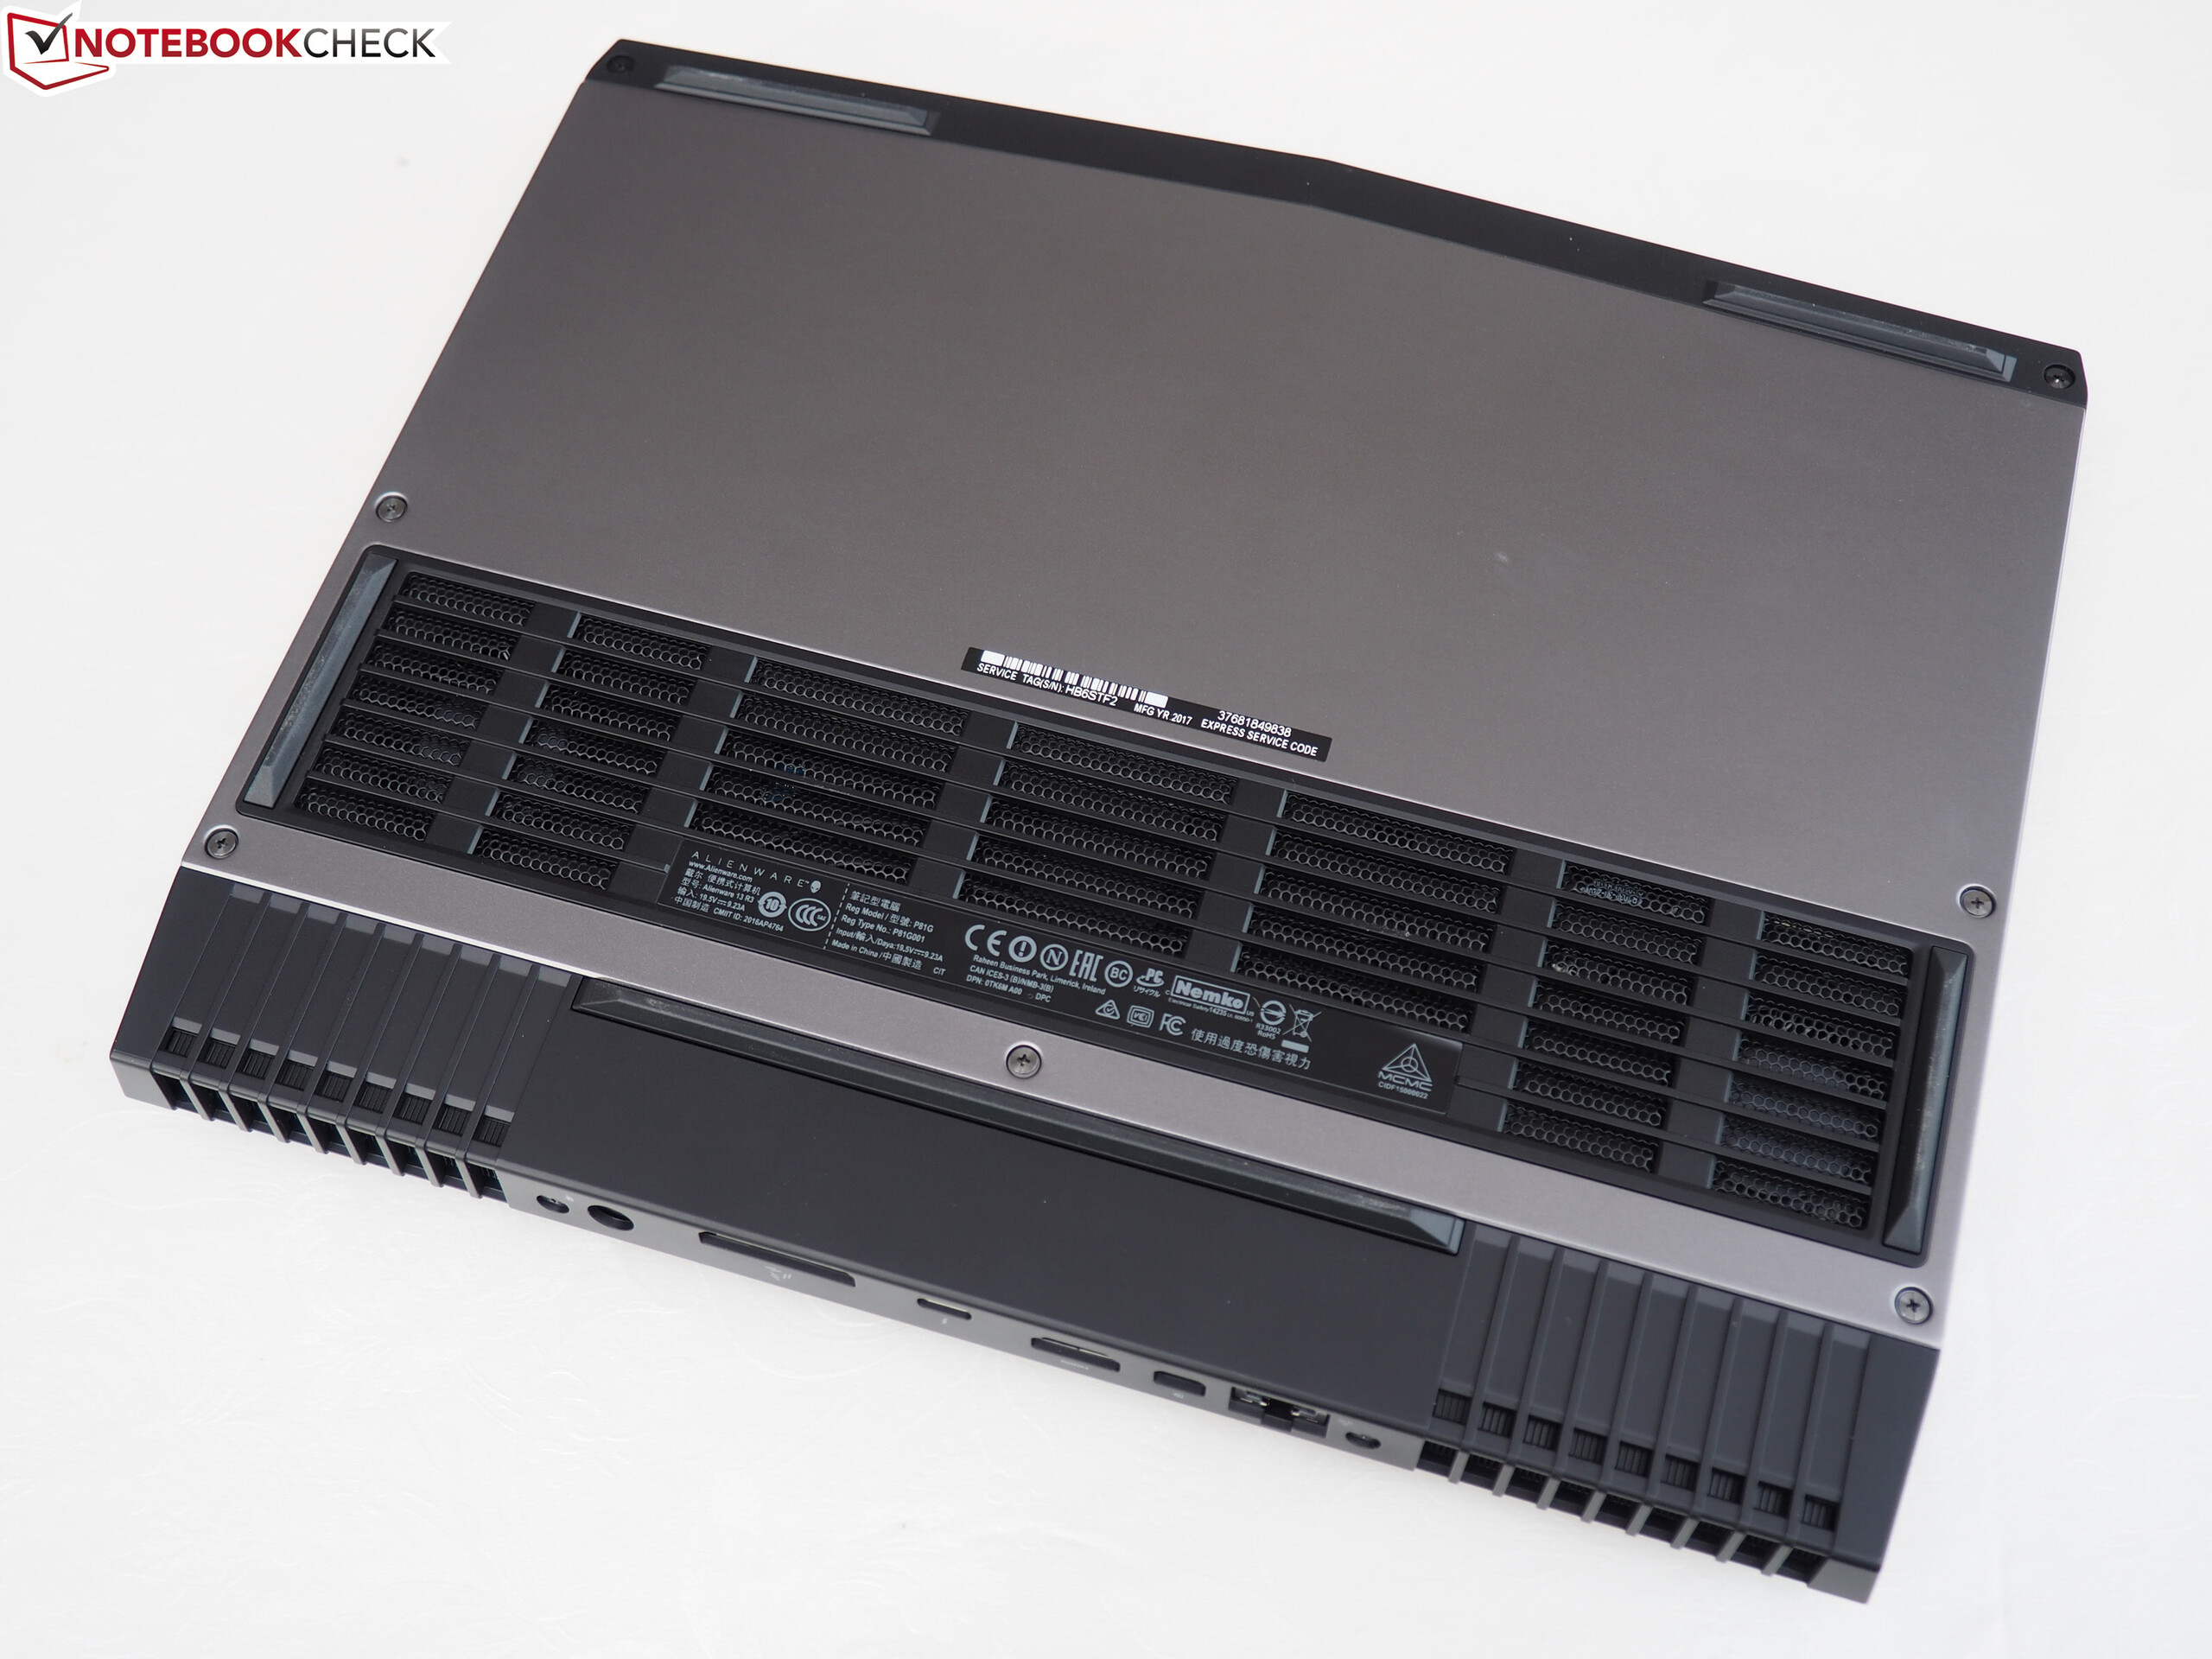 Alienware 13 R3 (FHD, i5, GTX 1050 Ti) Laptop Review 